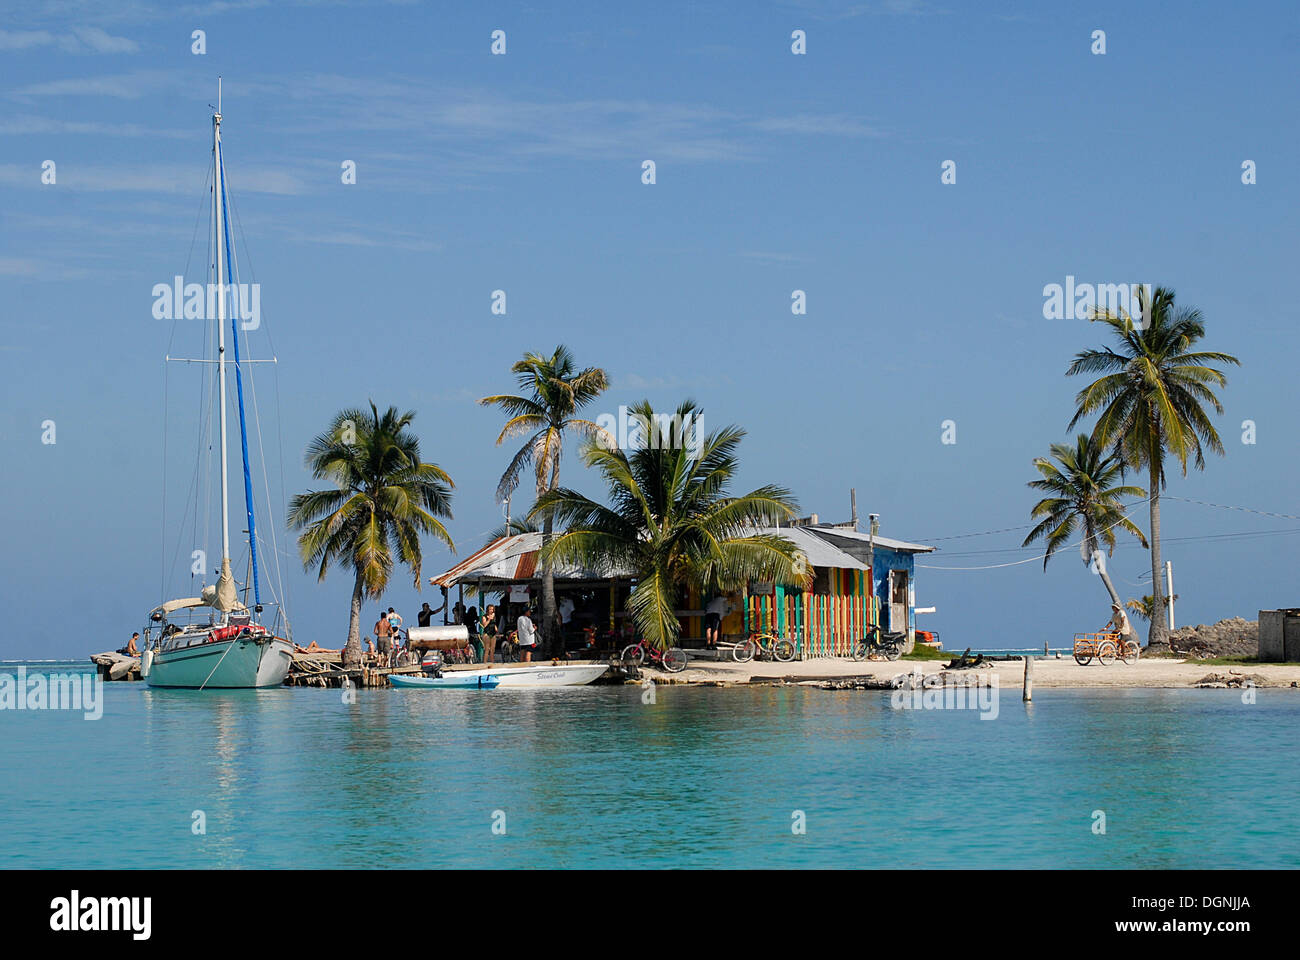 Beachbar under palm trees on Caye Caulker Island, Belize, Central America Stock Photo